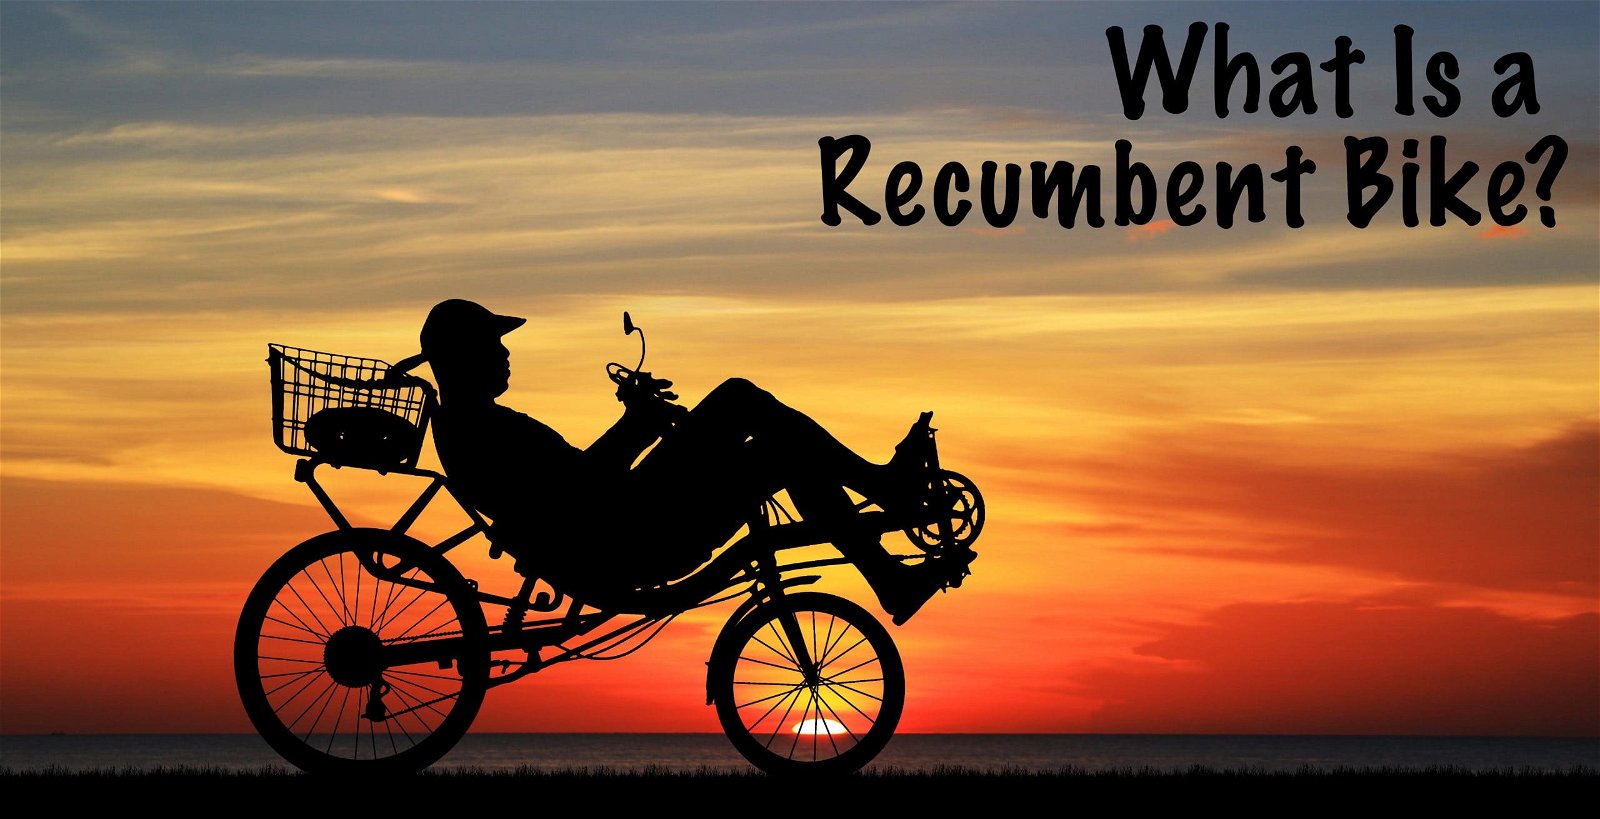 man riding recumbent bike - what is a recumbent bike?